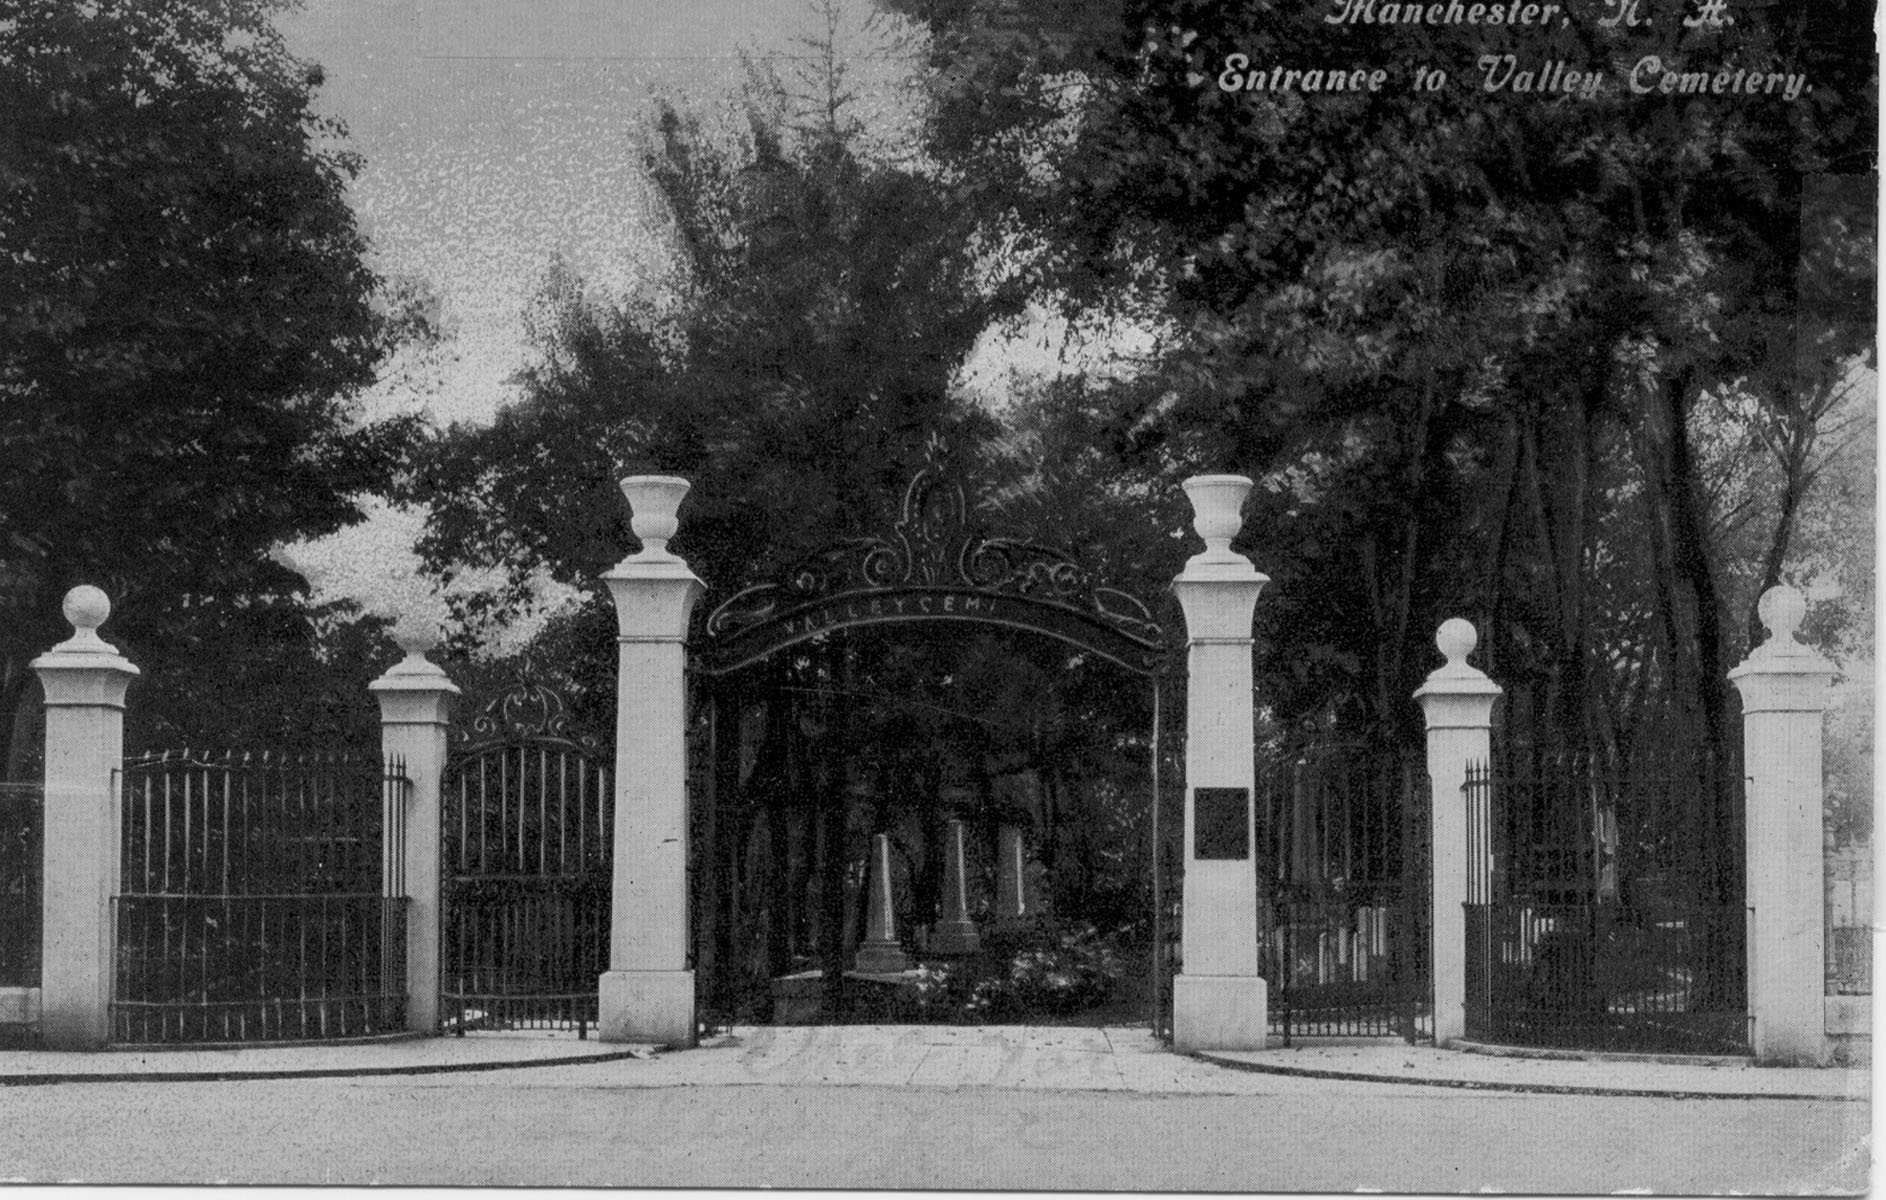 Valley cemetery 1900 postcard